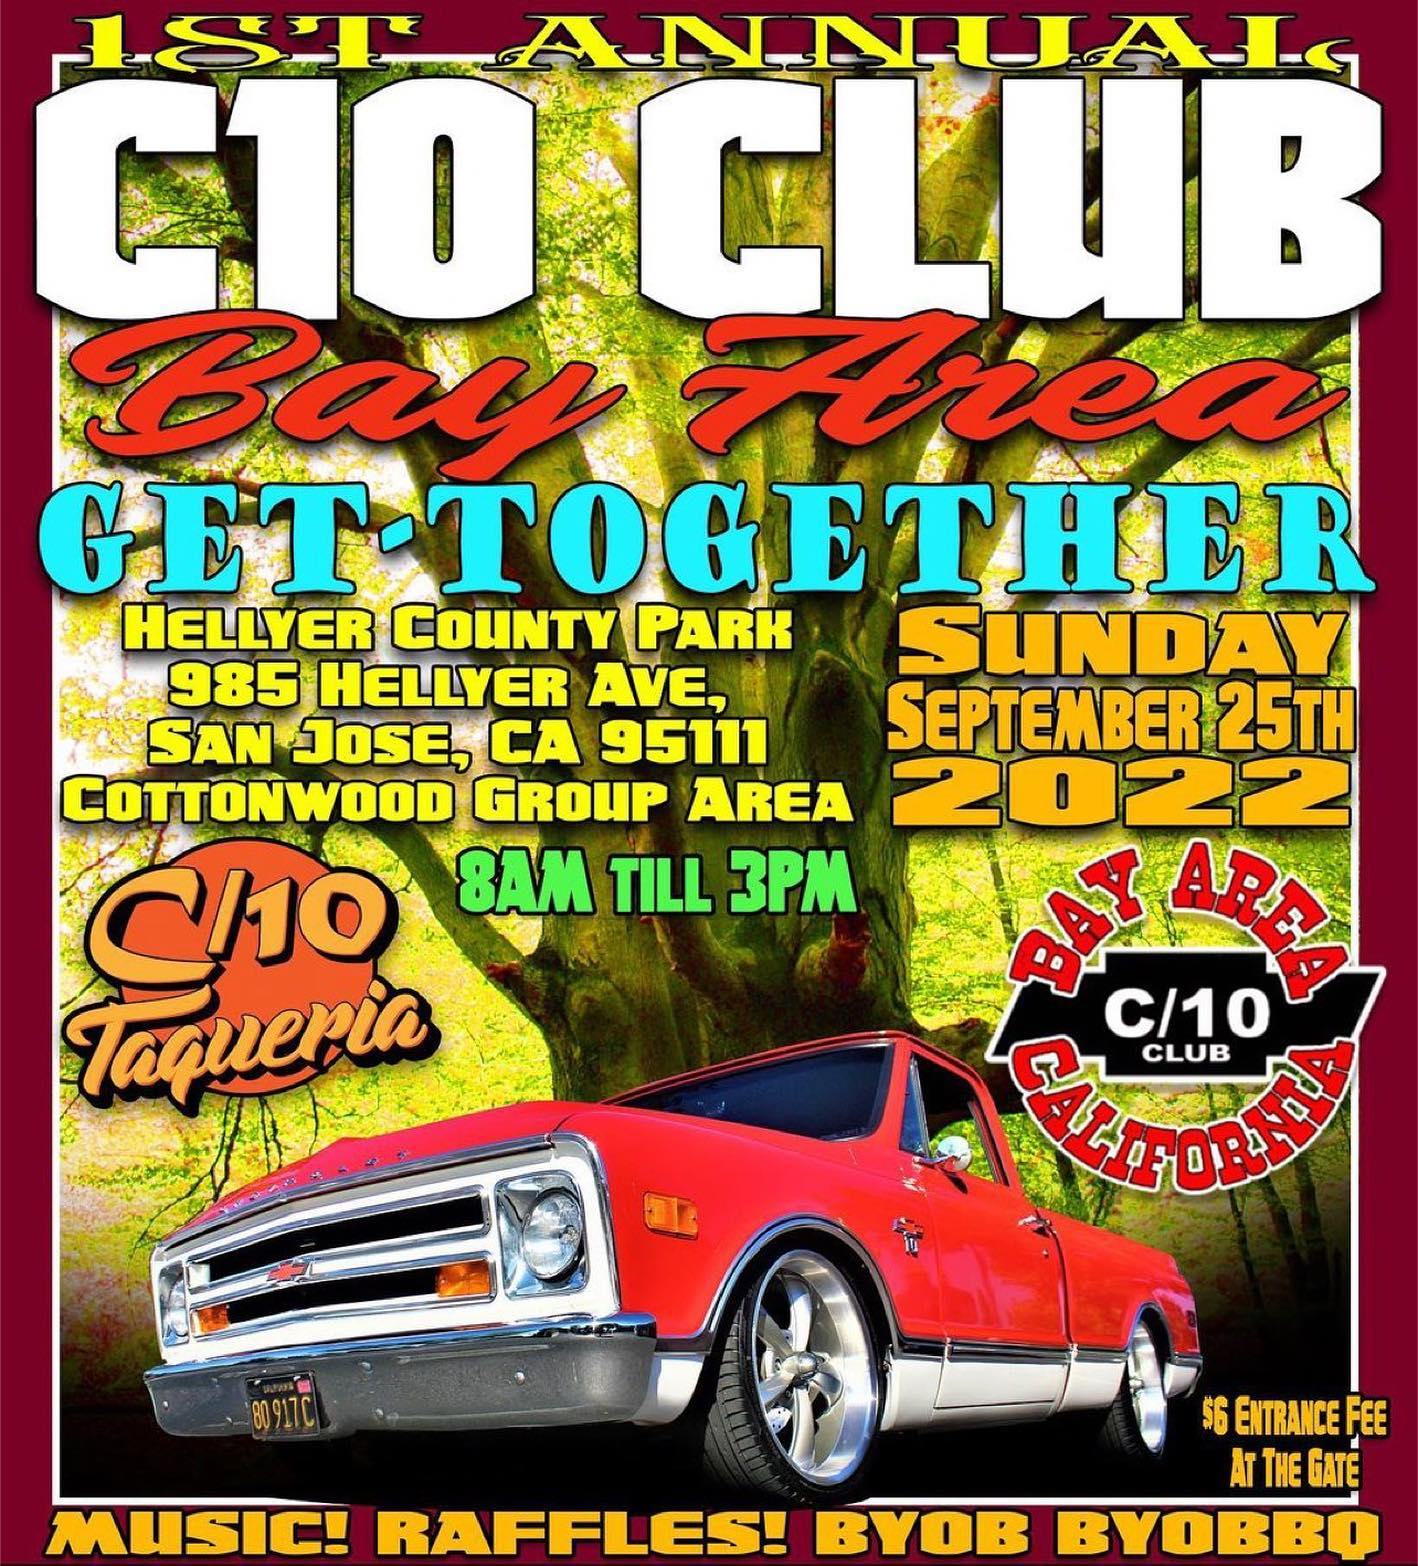 C10 Club Bay Area Get-Together